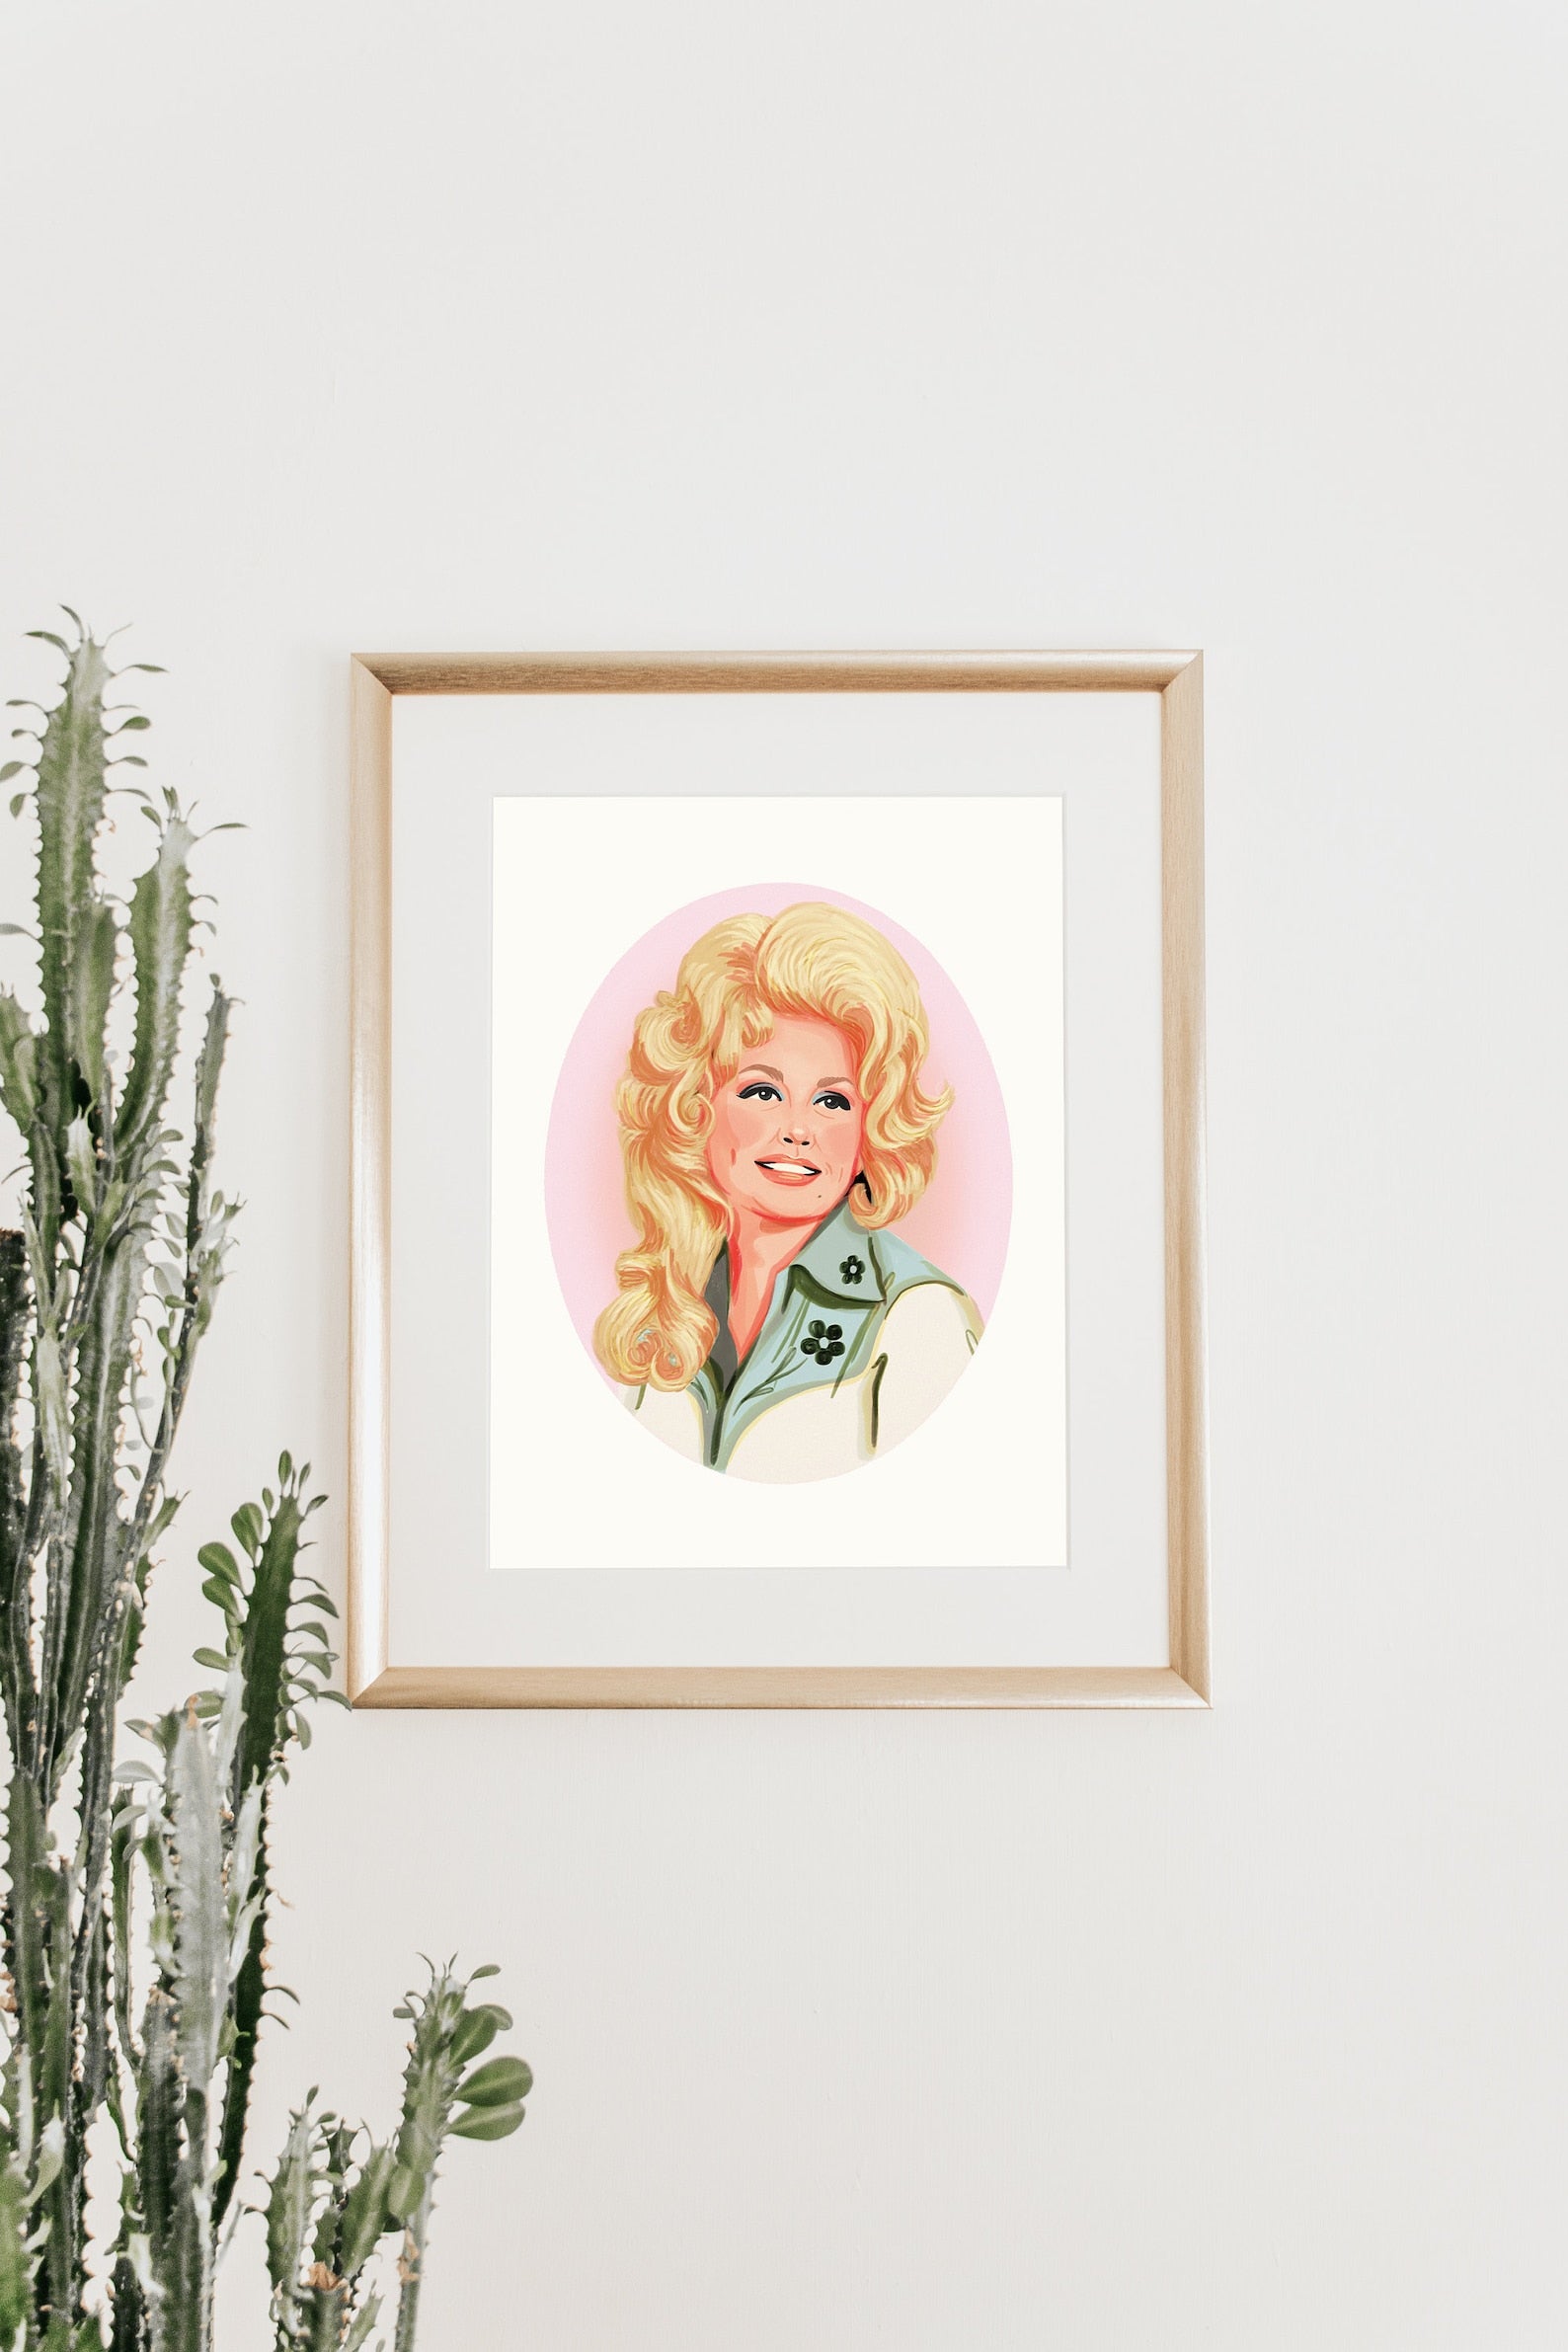 Dolly Parton 8x8 Print